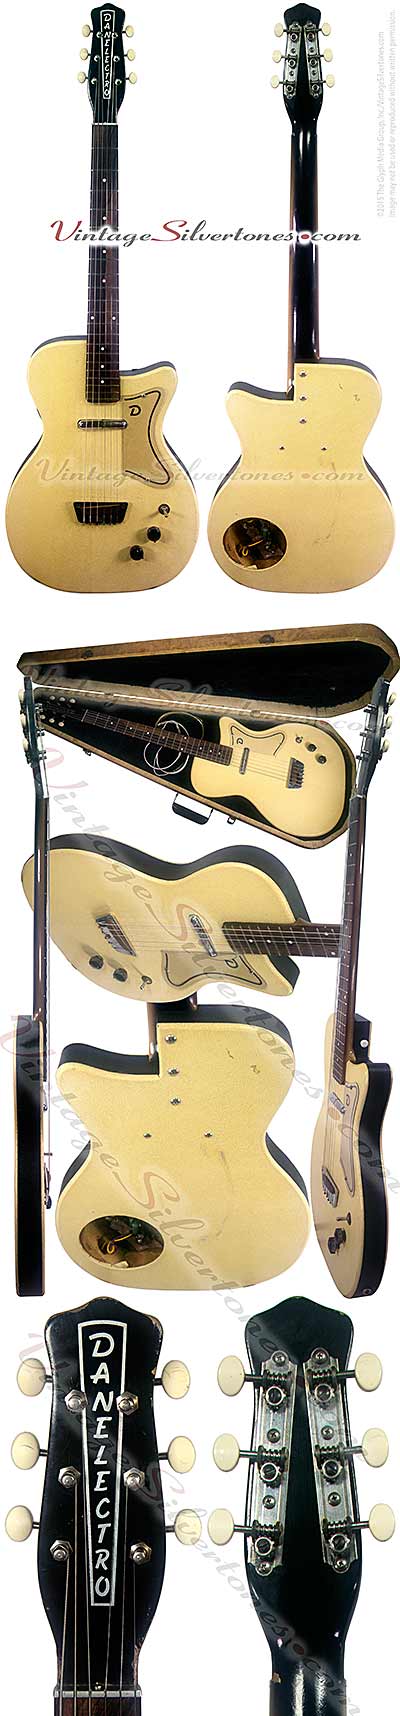 Danelectro U1 - single pickup ivory leatherette electric guitar 1956